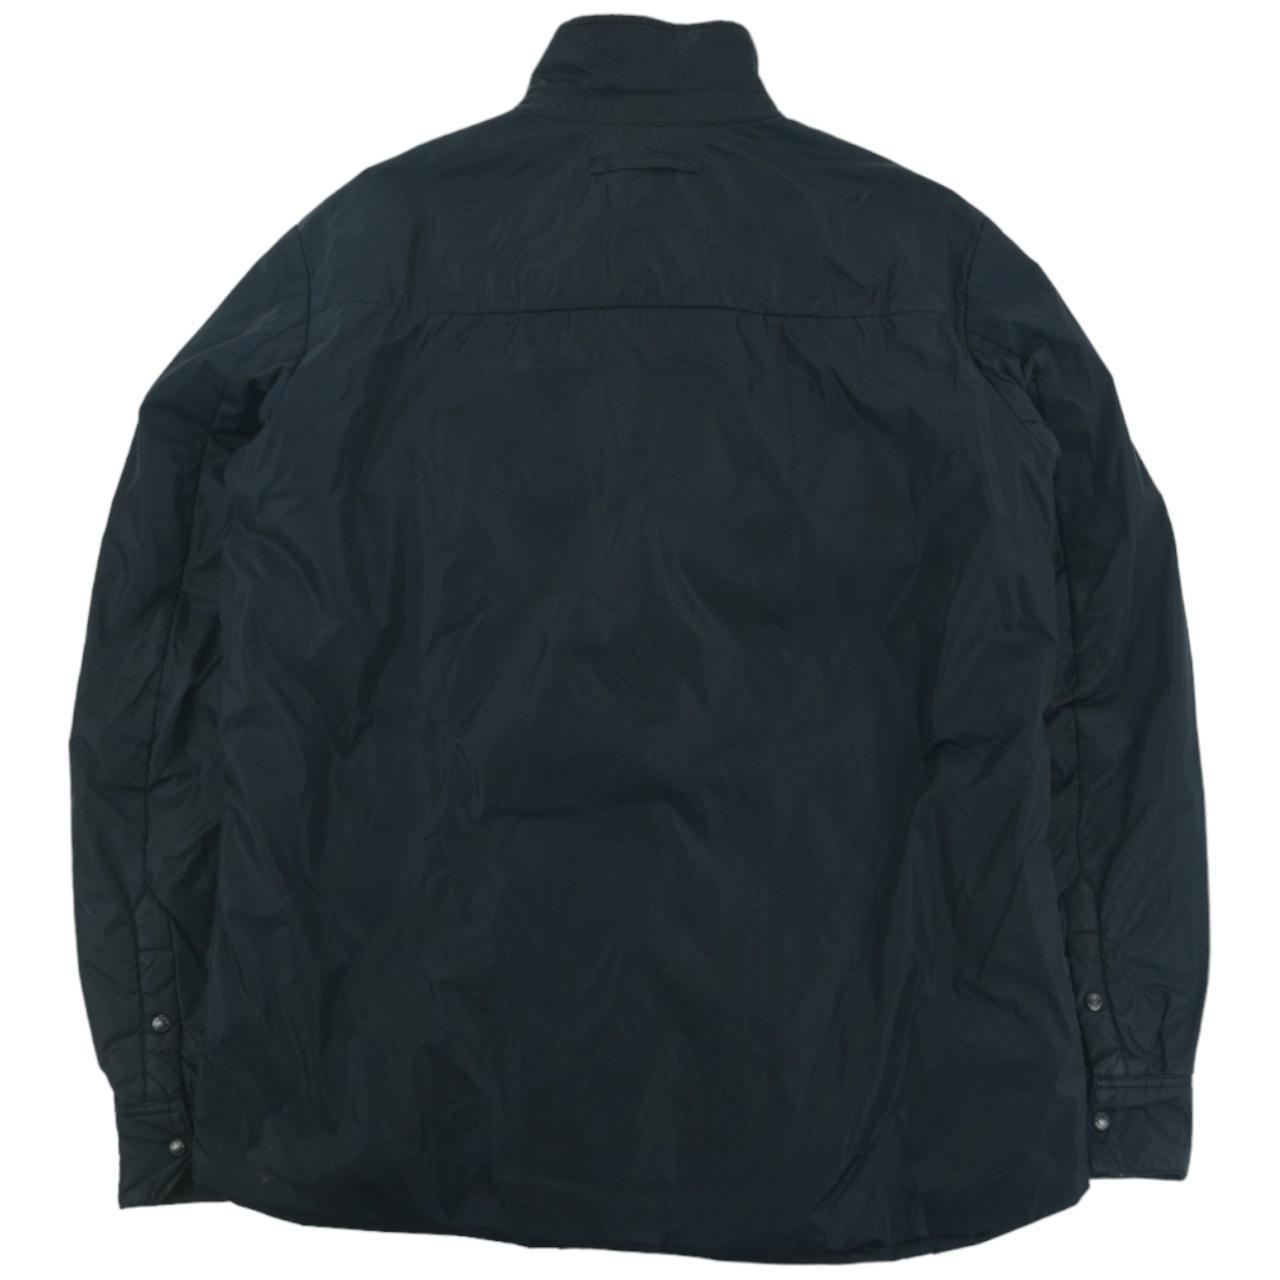 Vintage Prada Sport Jacket Size XL - Known Source